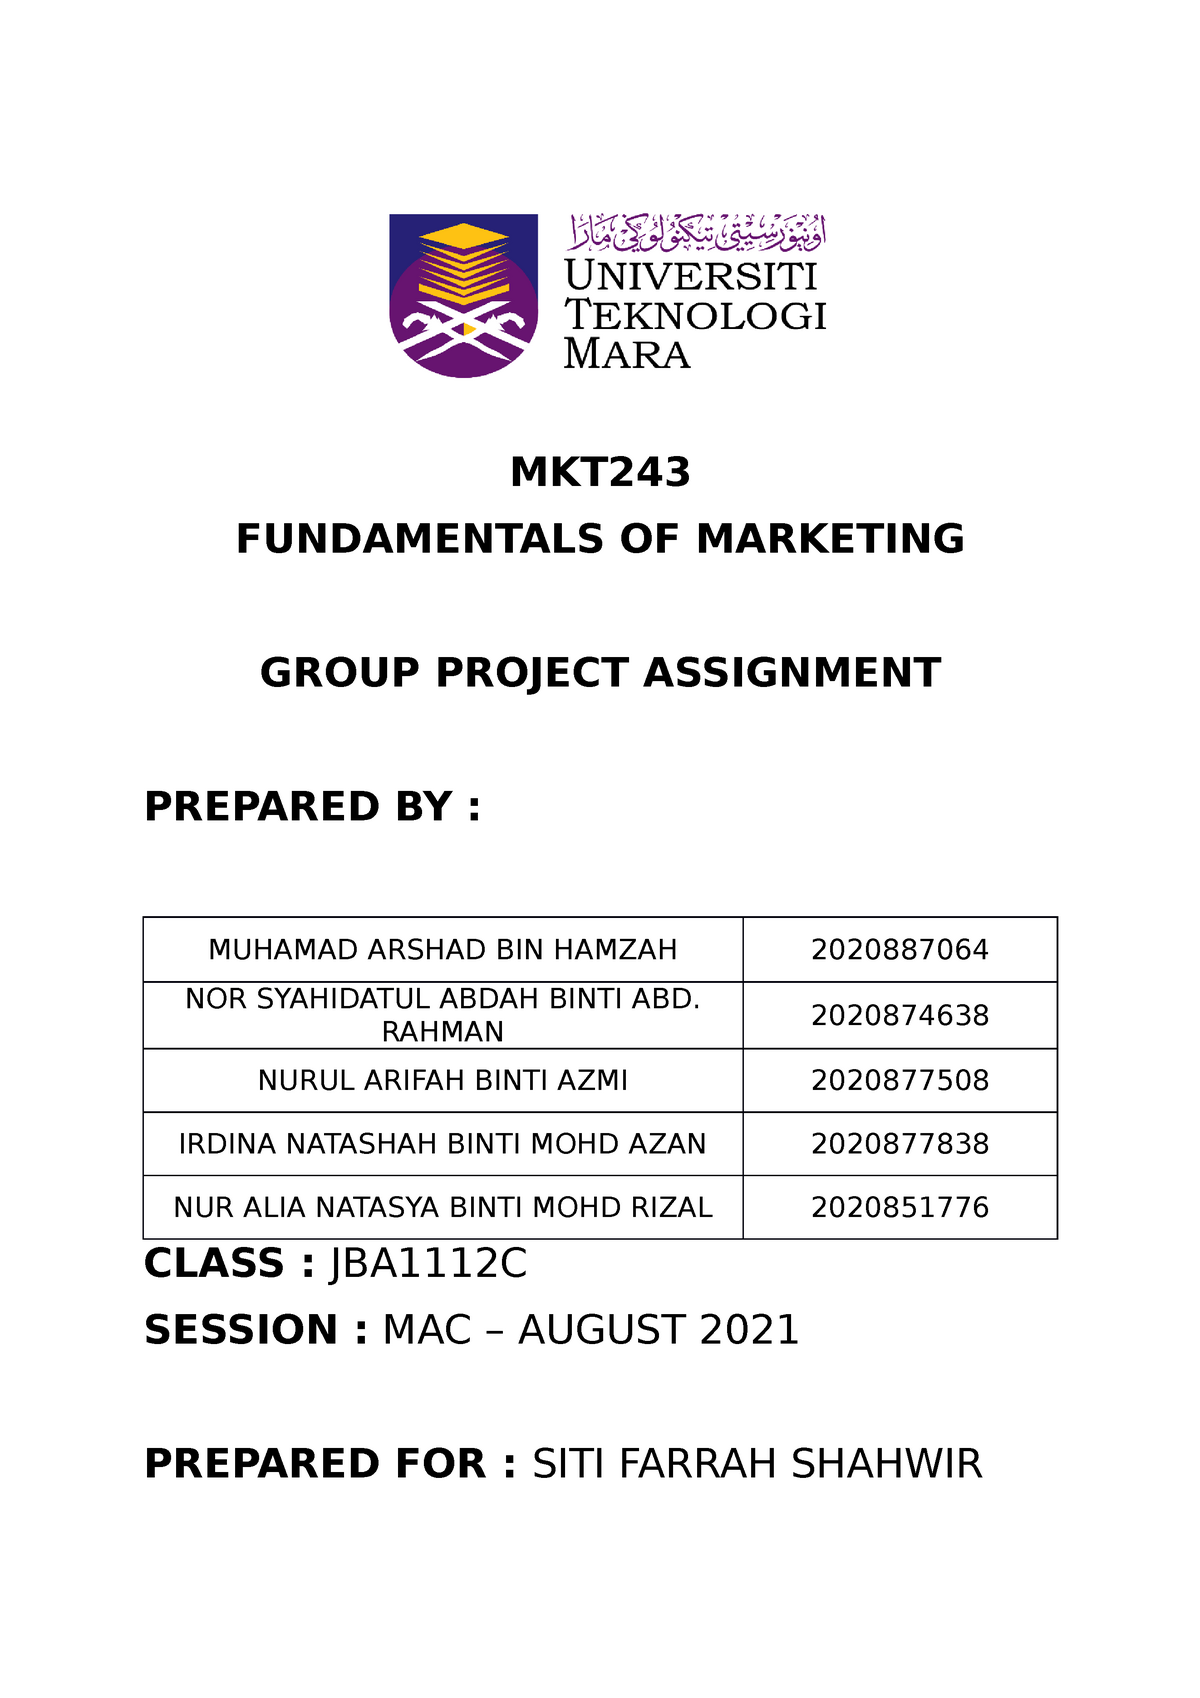 group assignment mkt243